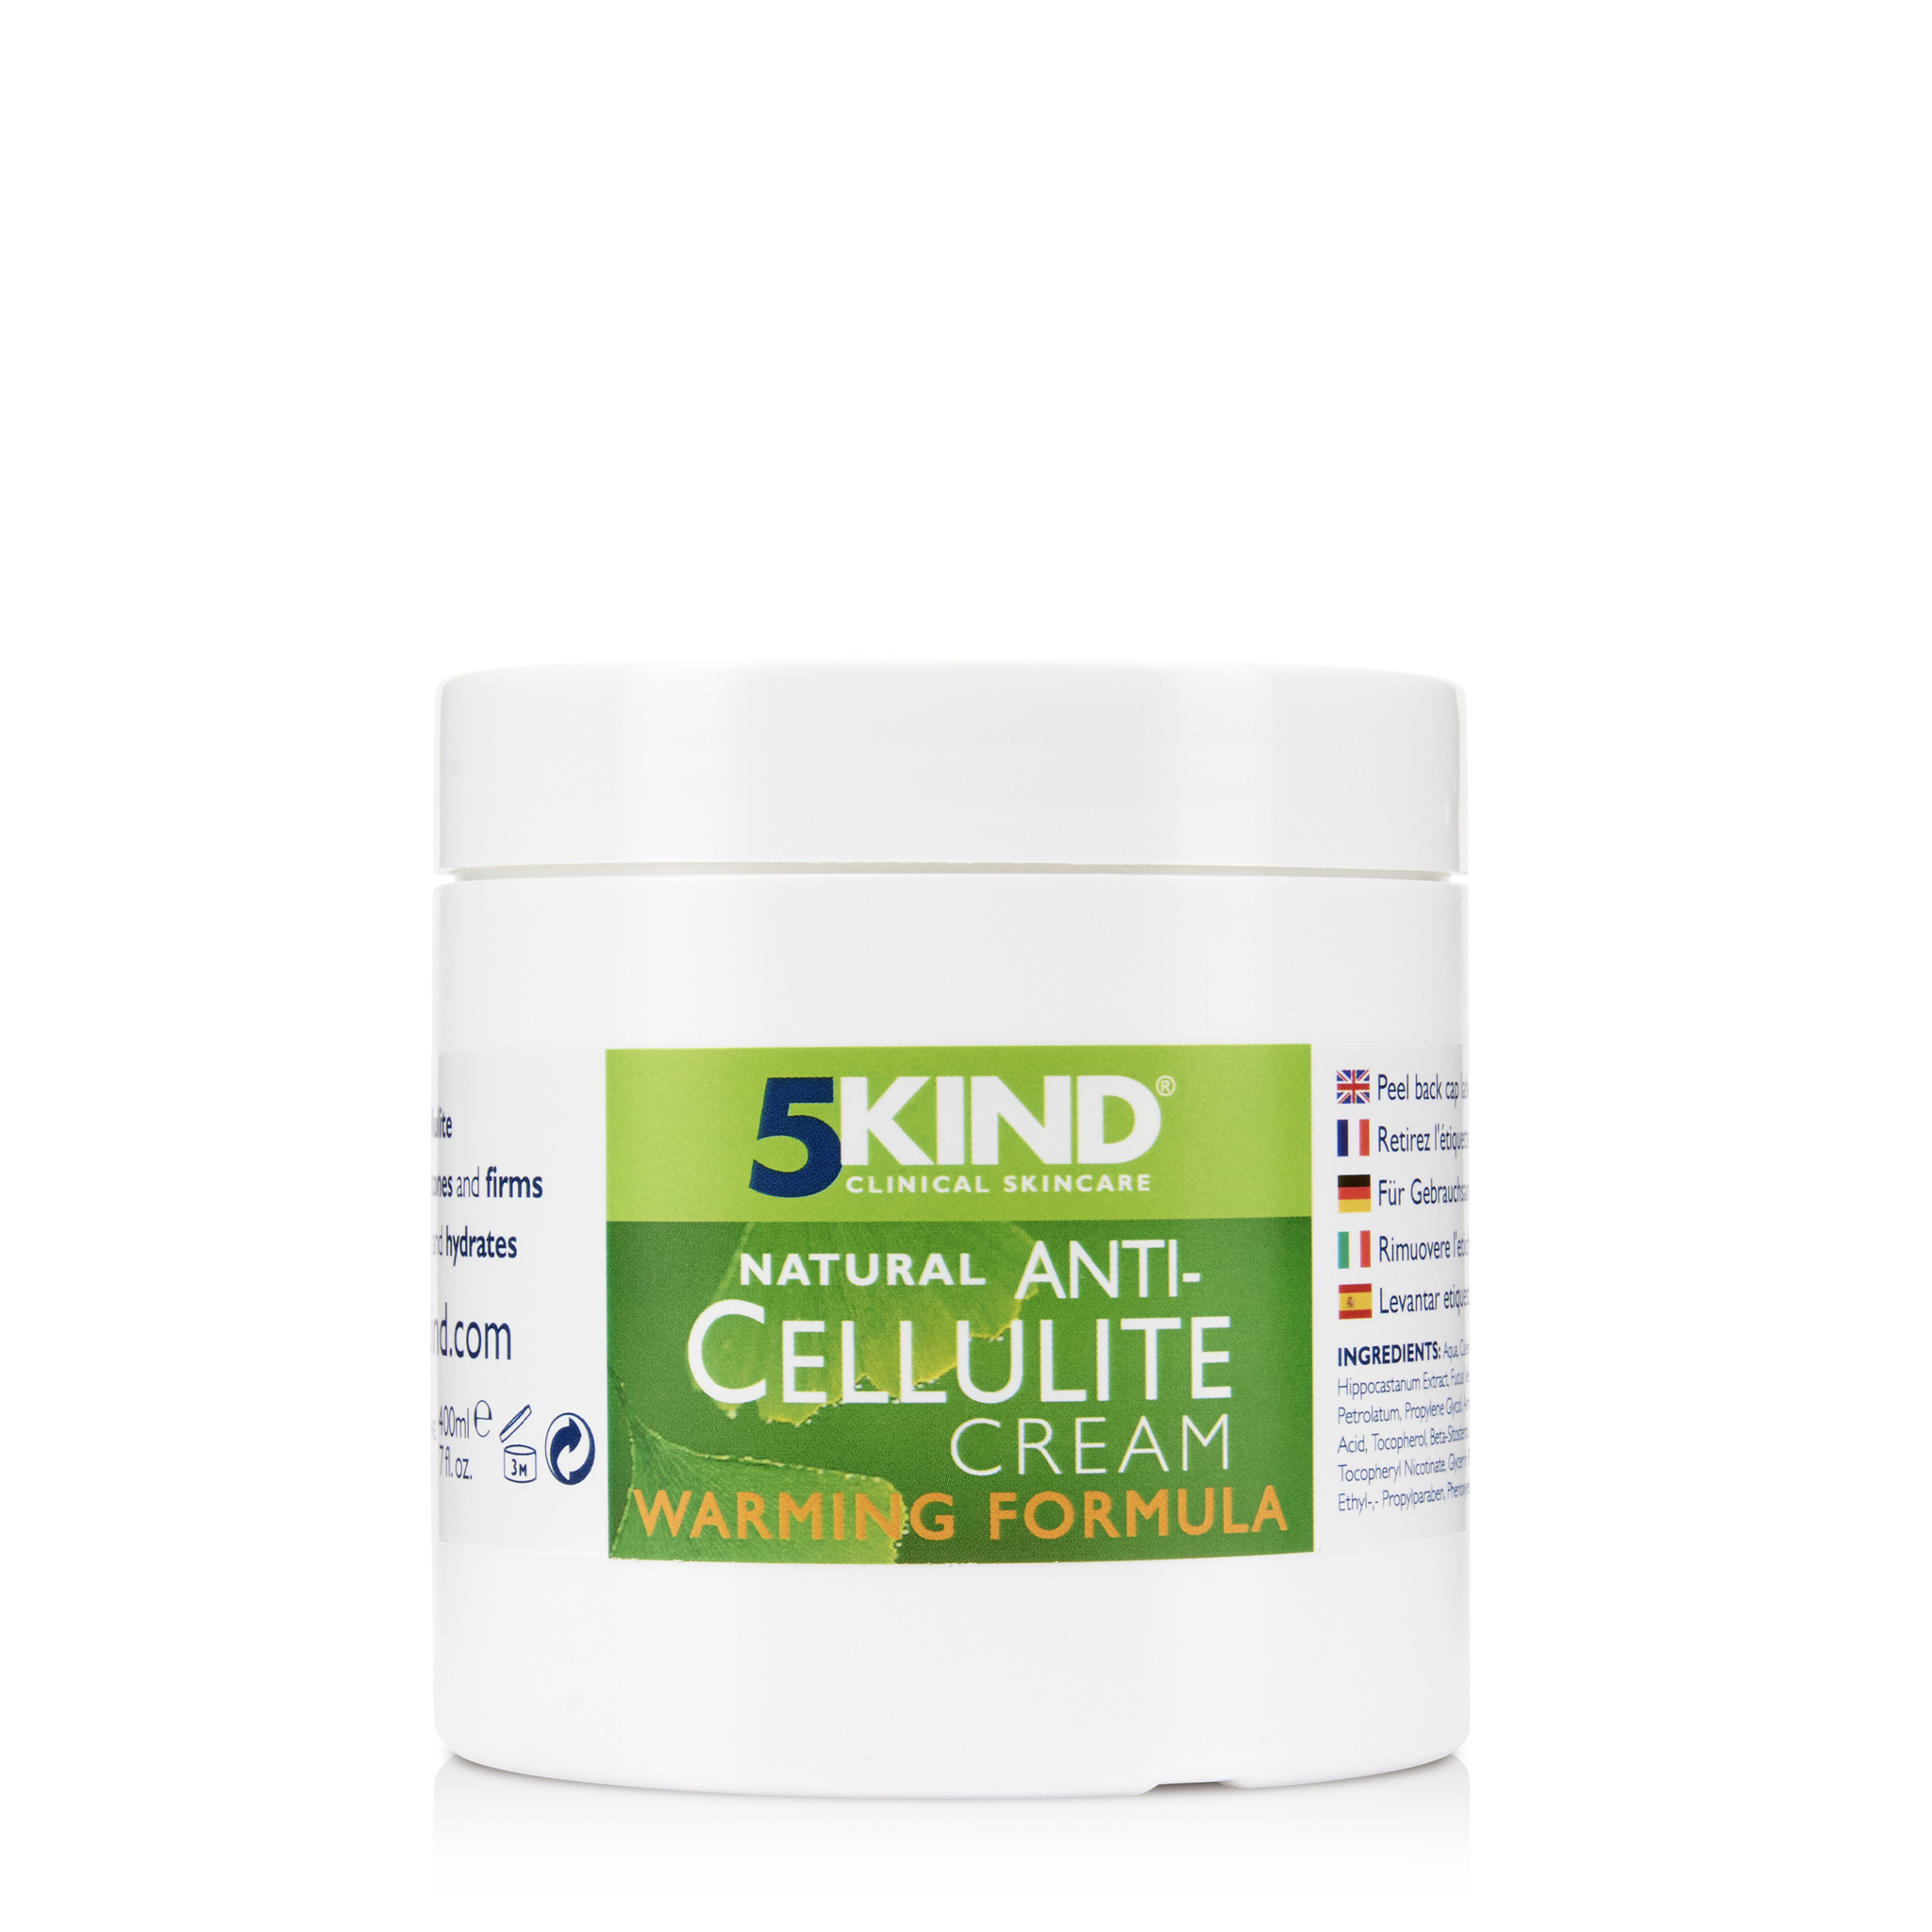 5Kind Natural Cellulite Cream